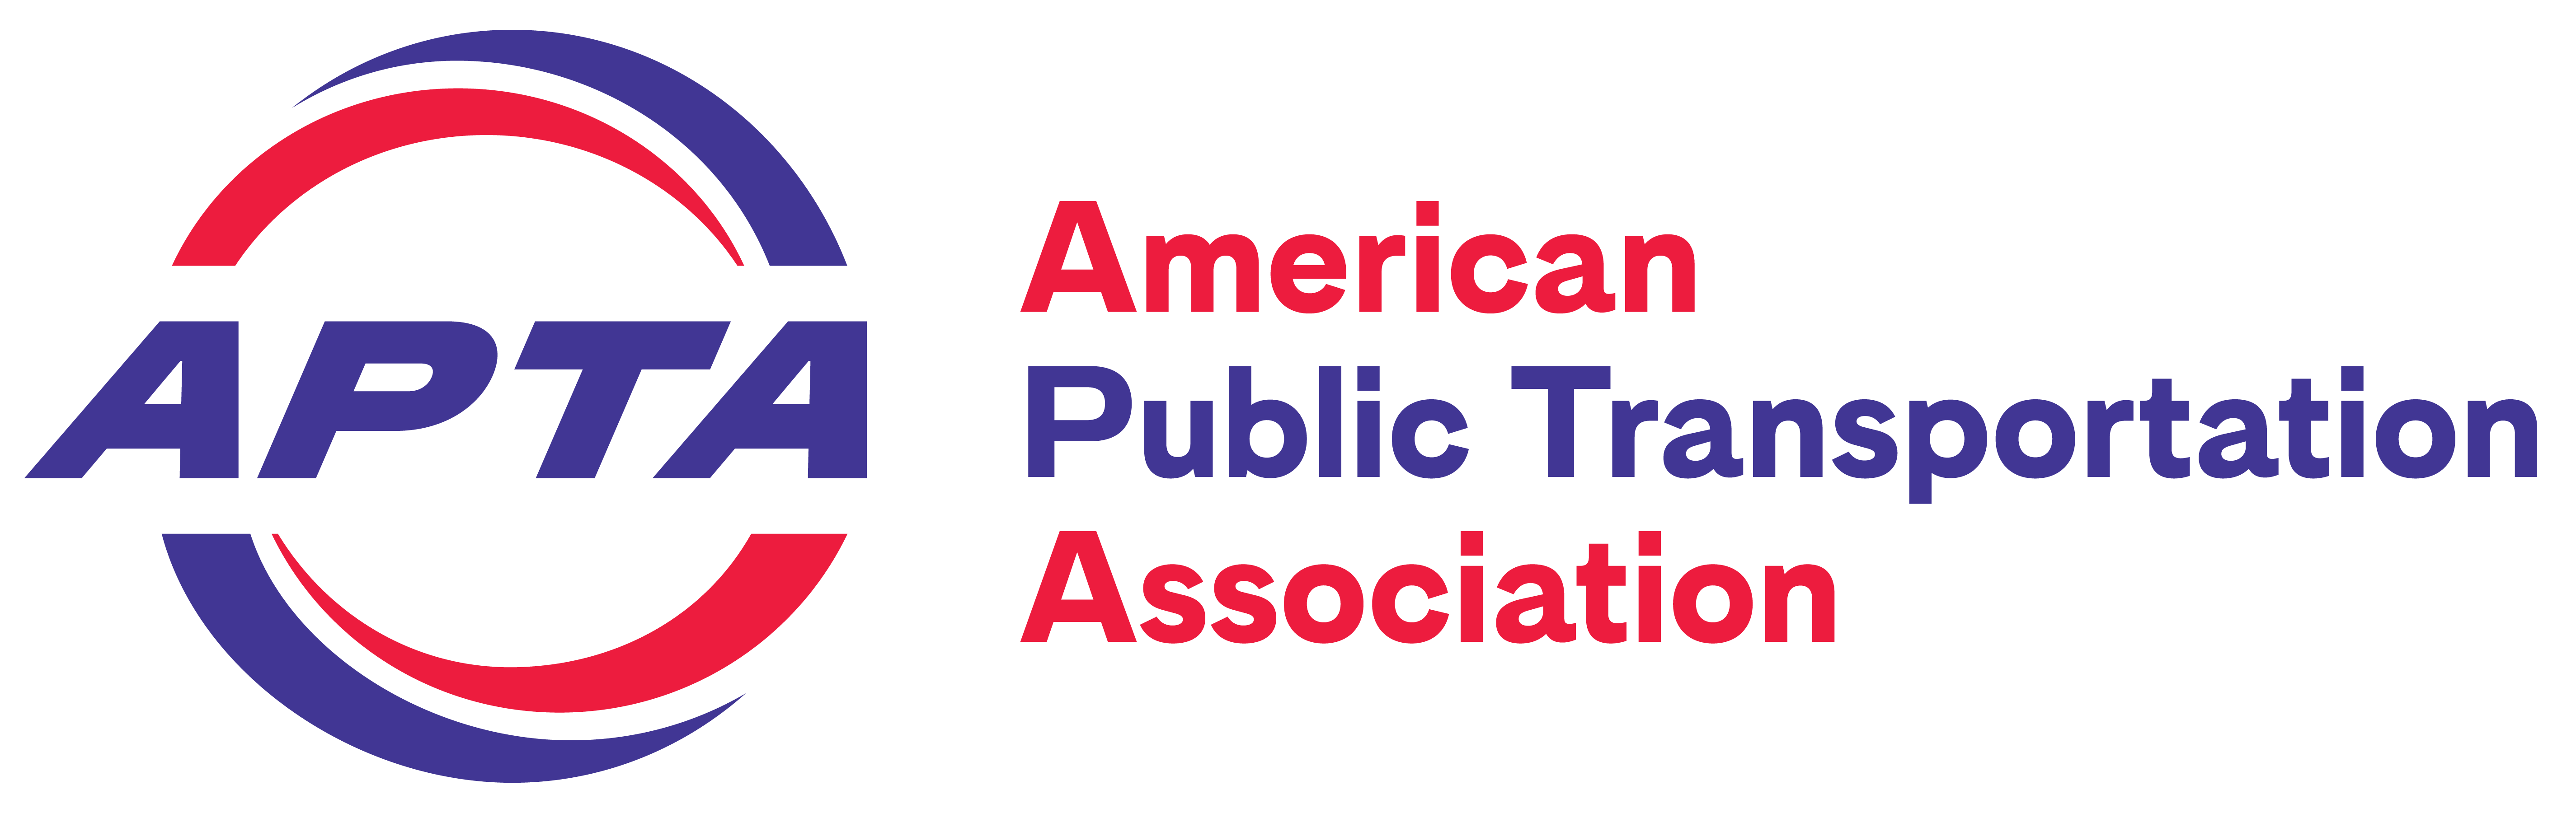 American Public Transportation Association logo